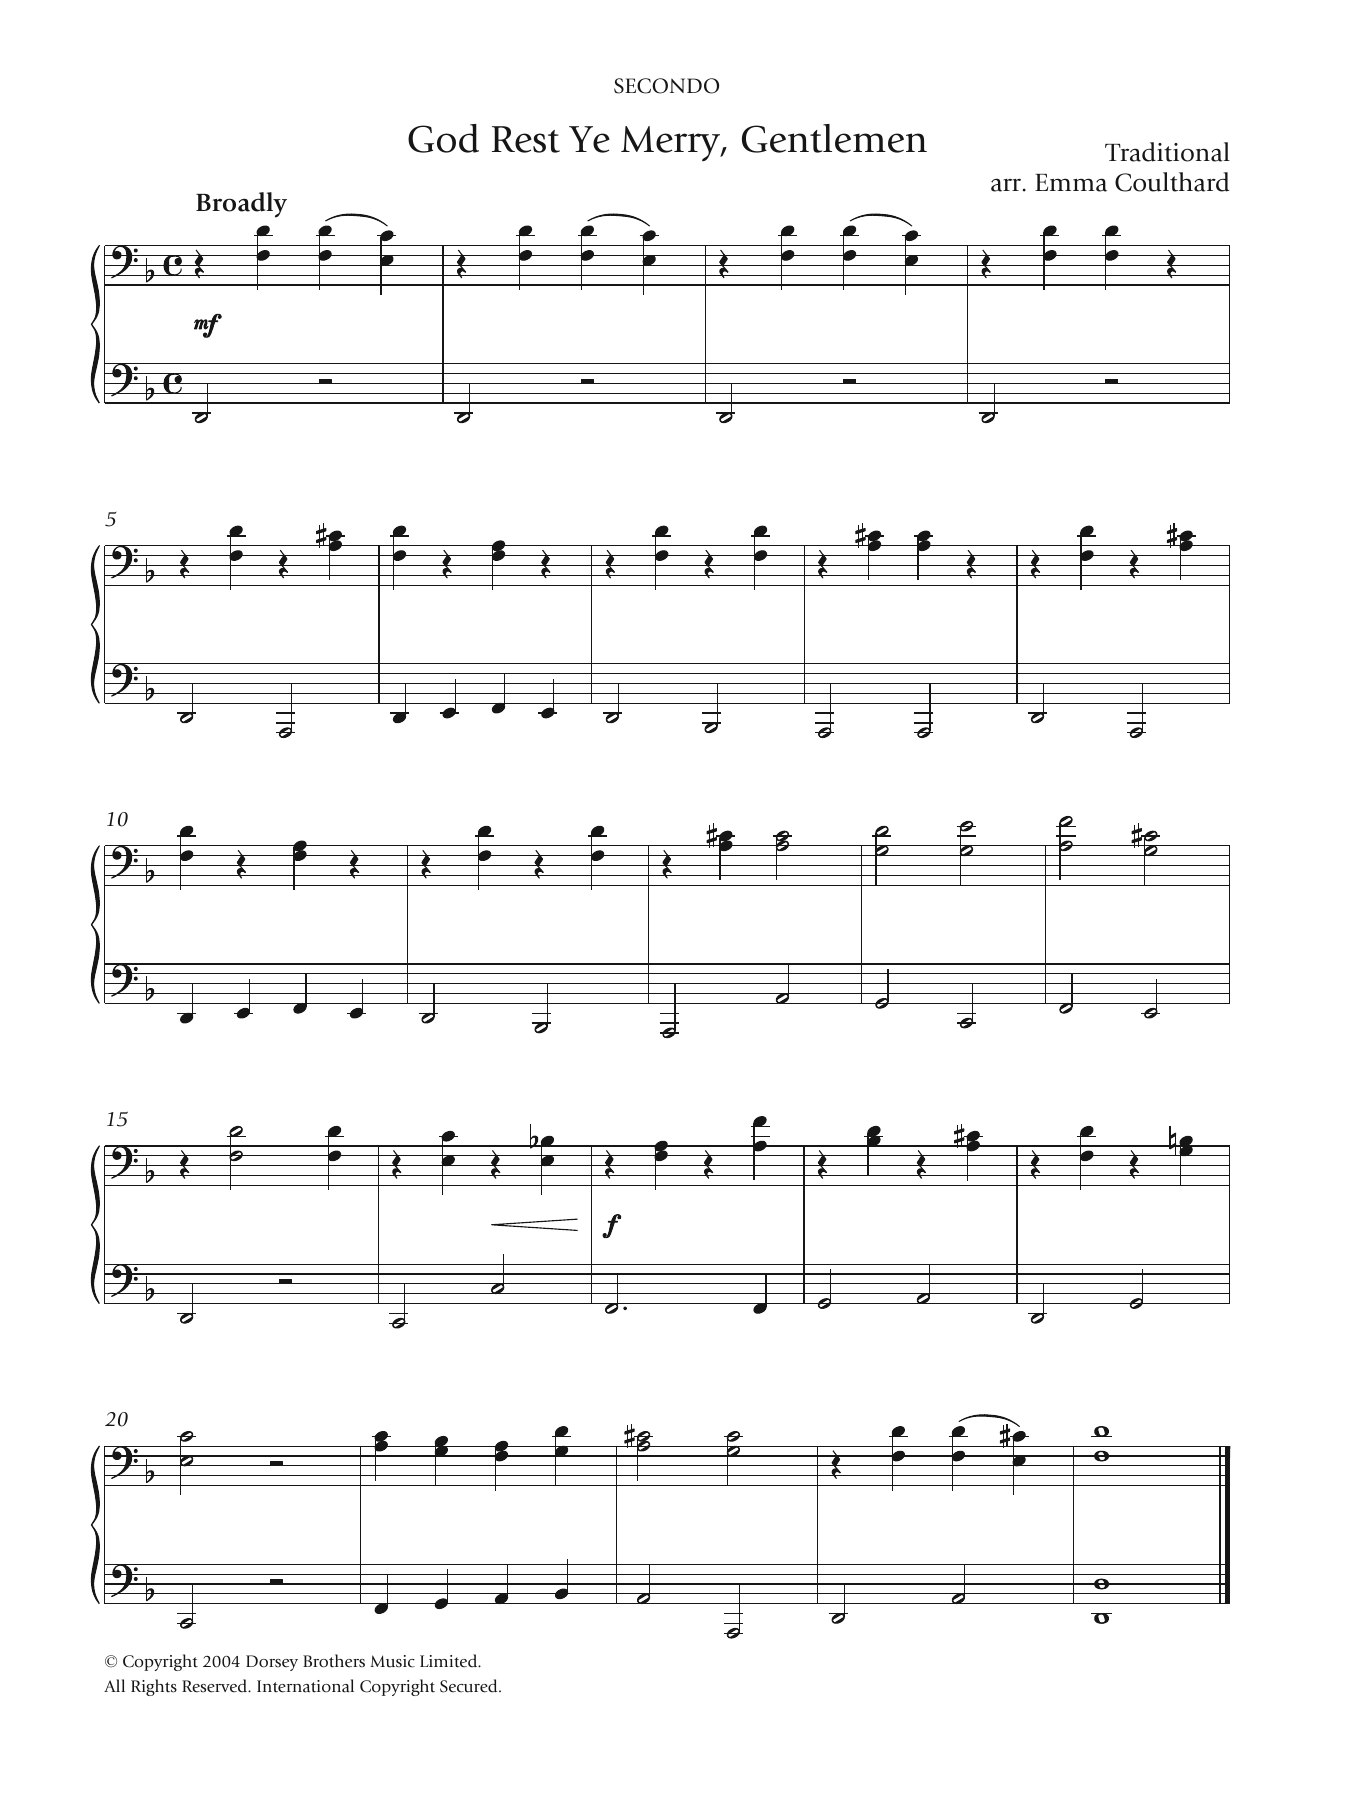 Christmas Carol God Rest Ye Merry, Gentlemen Sheet Music Notes & Chords for Trombone Transcription - Download or Print PDF